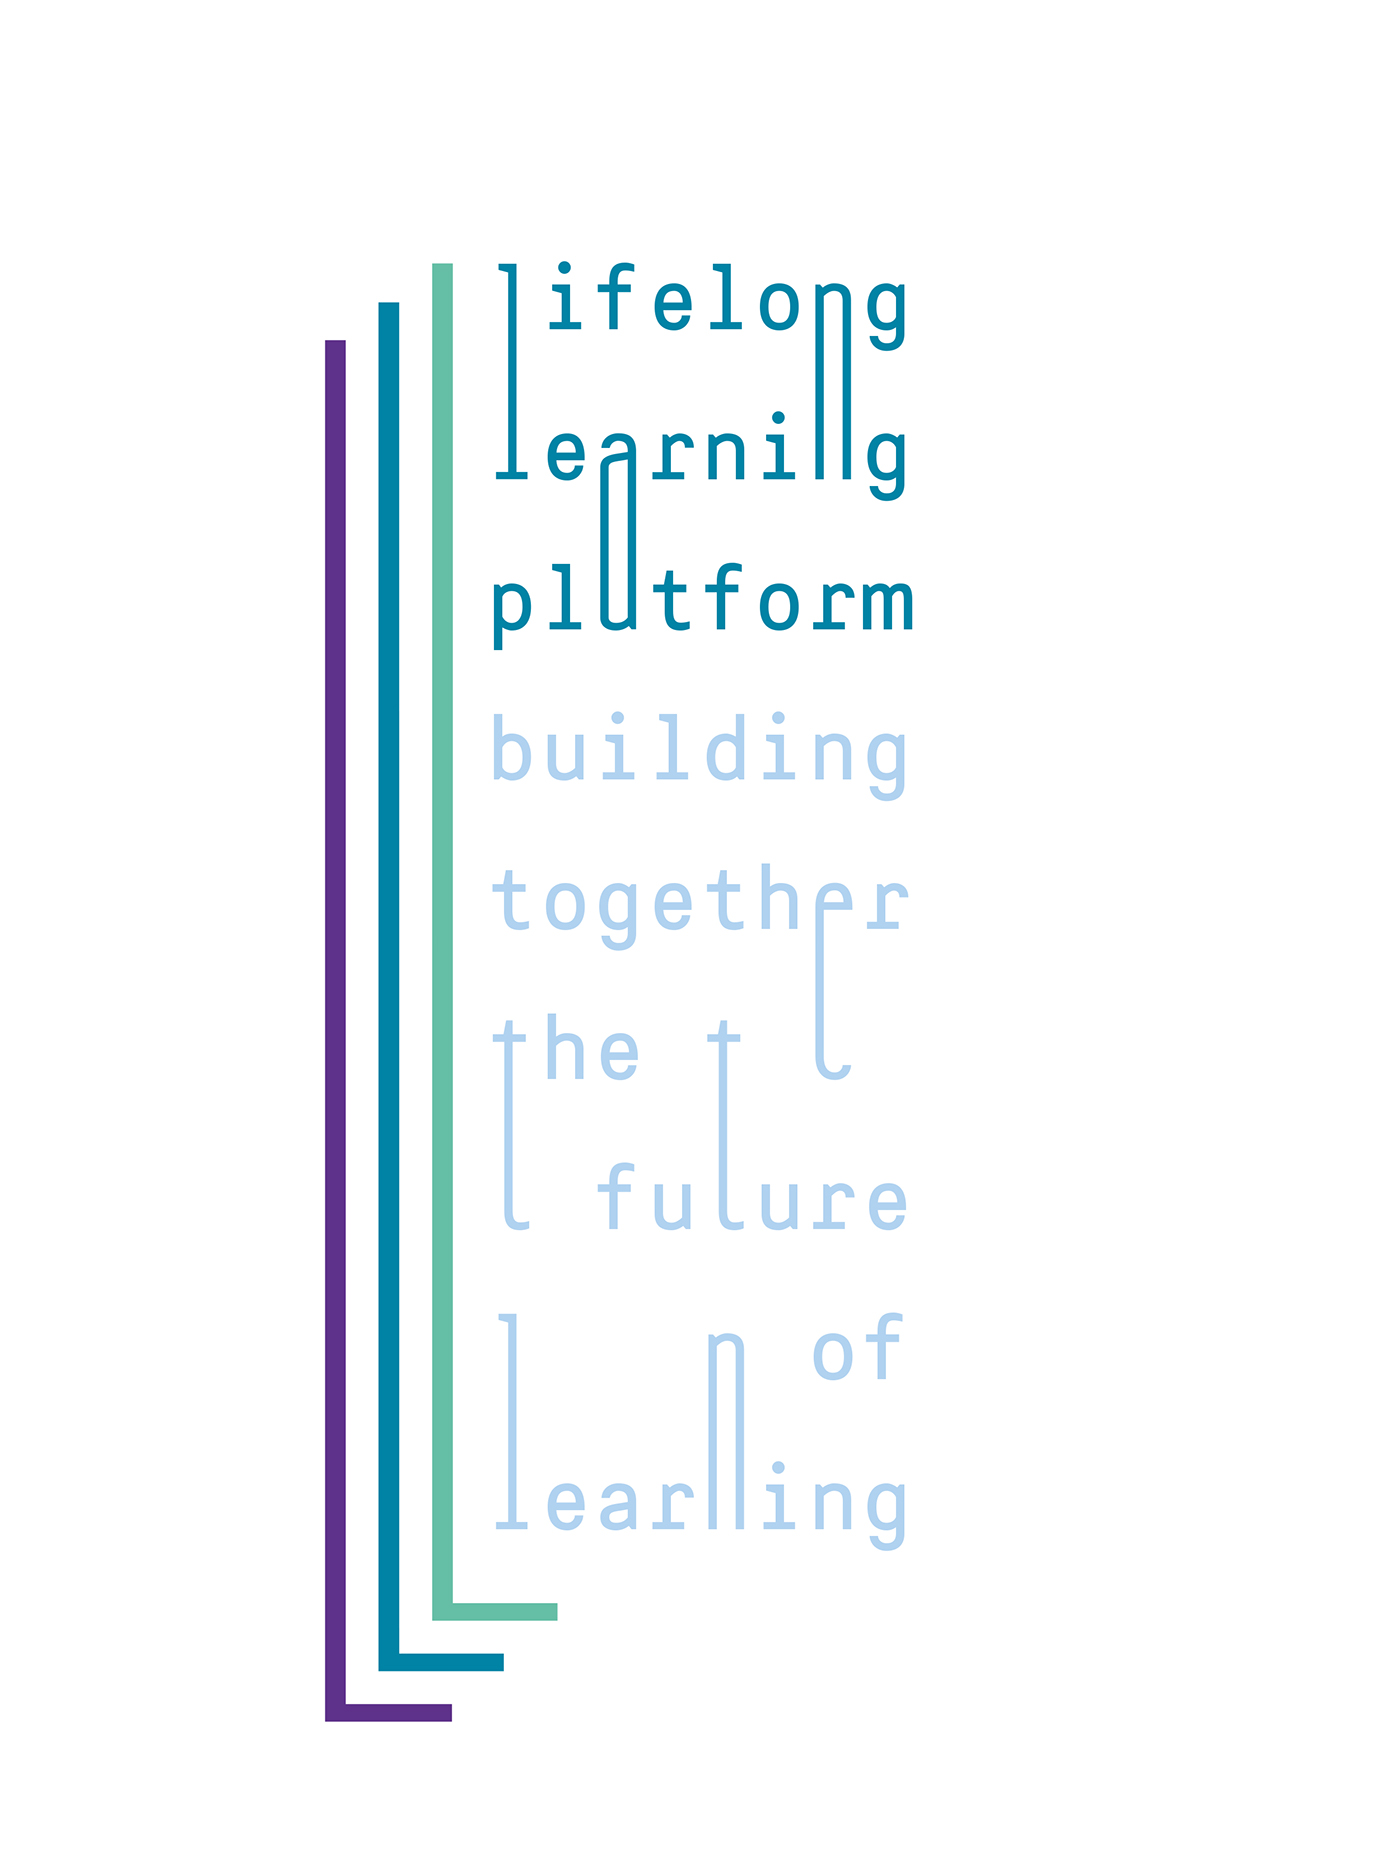 david colin lifelong learning Platform lifelong learning platform identité identity Layout Typographie typo font stretched grid communication